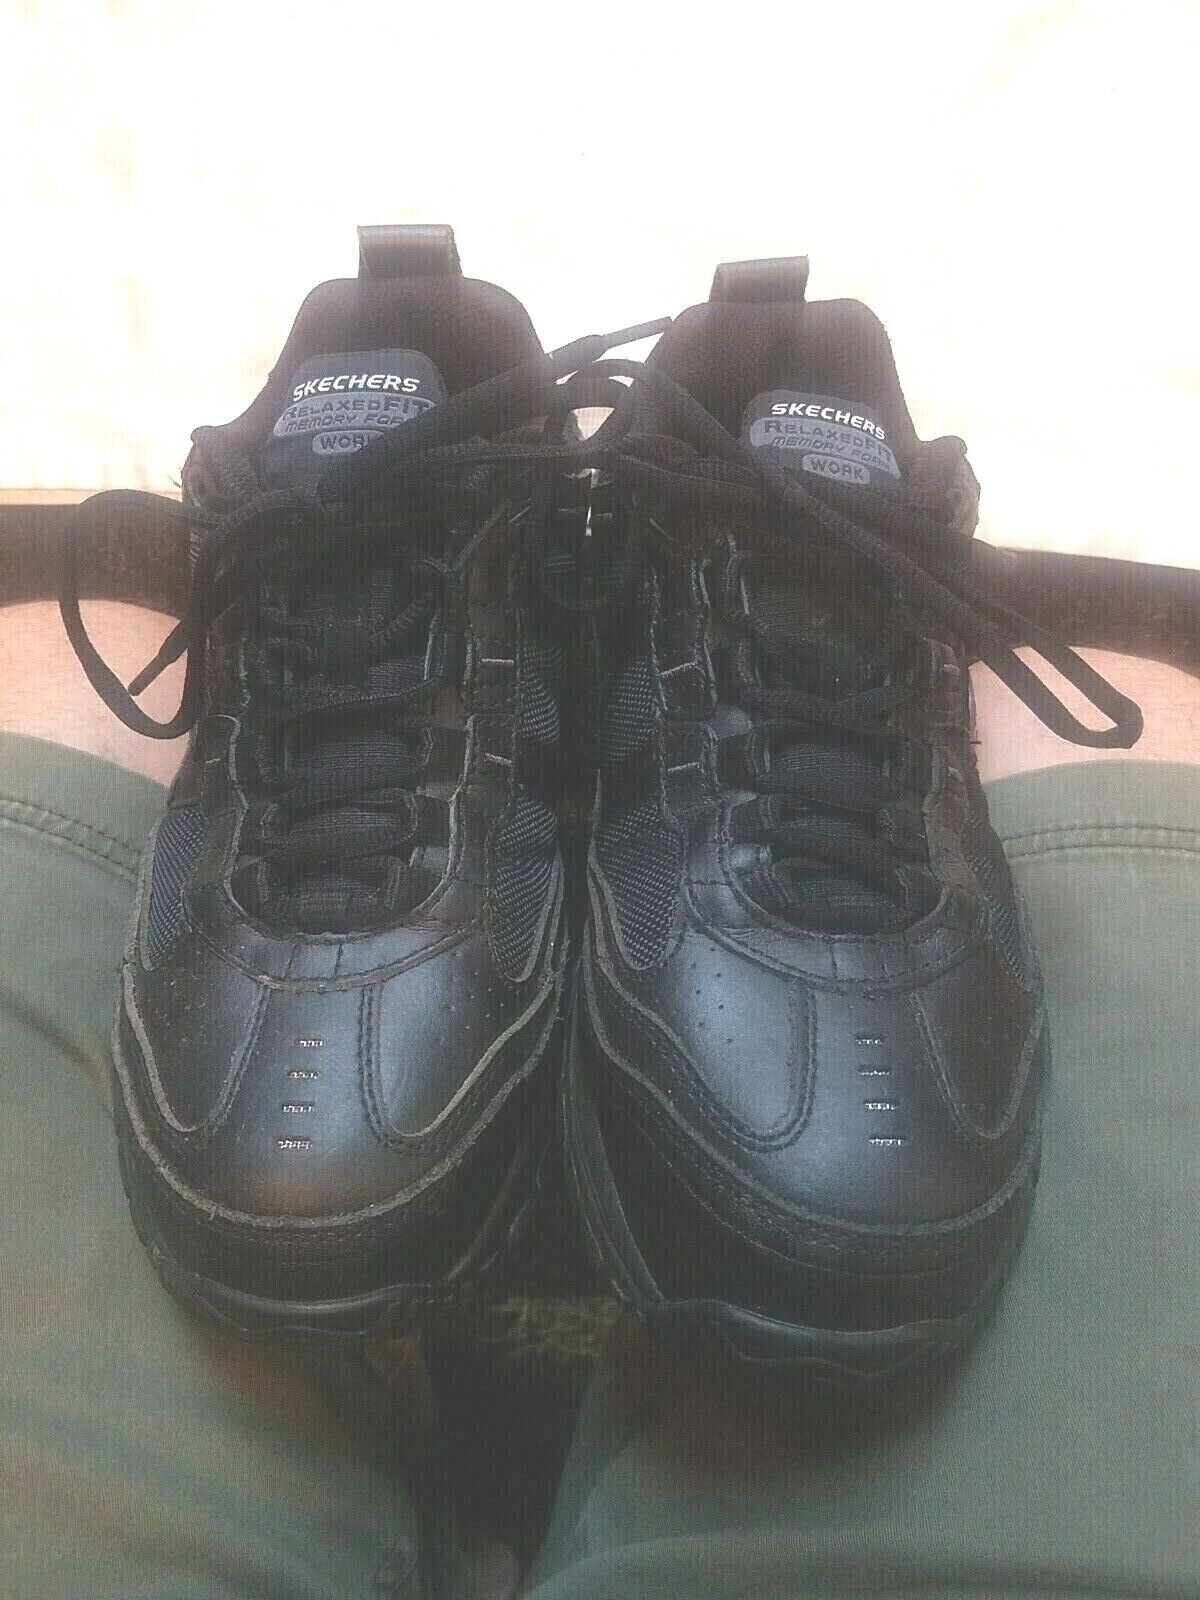 Skechers Mens Relaxed Fit Memory Foam 77013 Work Shoe Composite Toe Black Sz 7